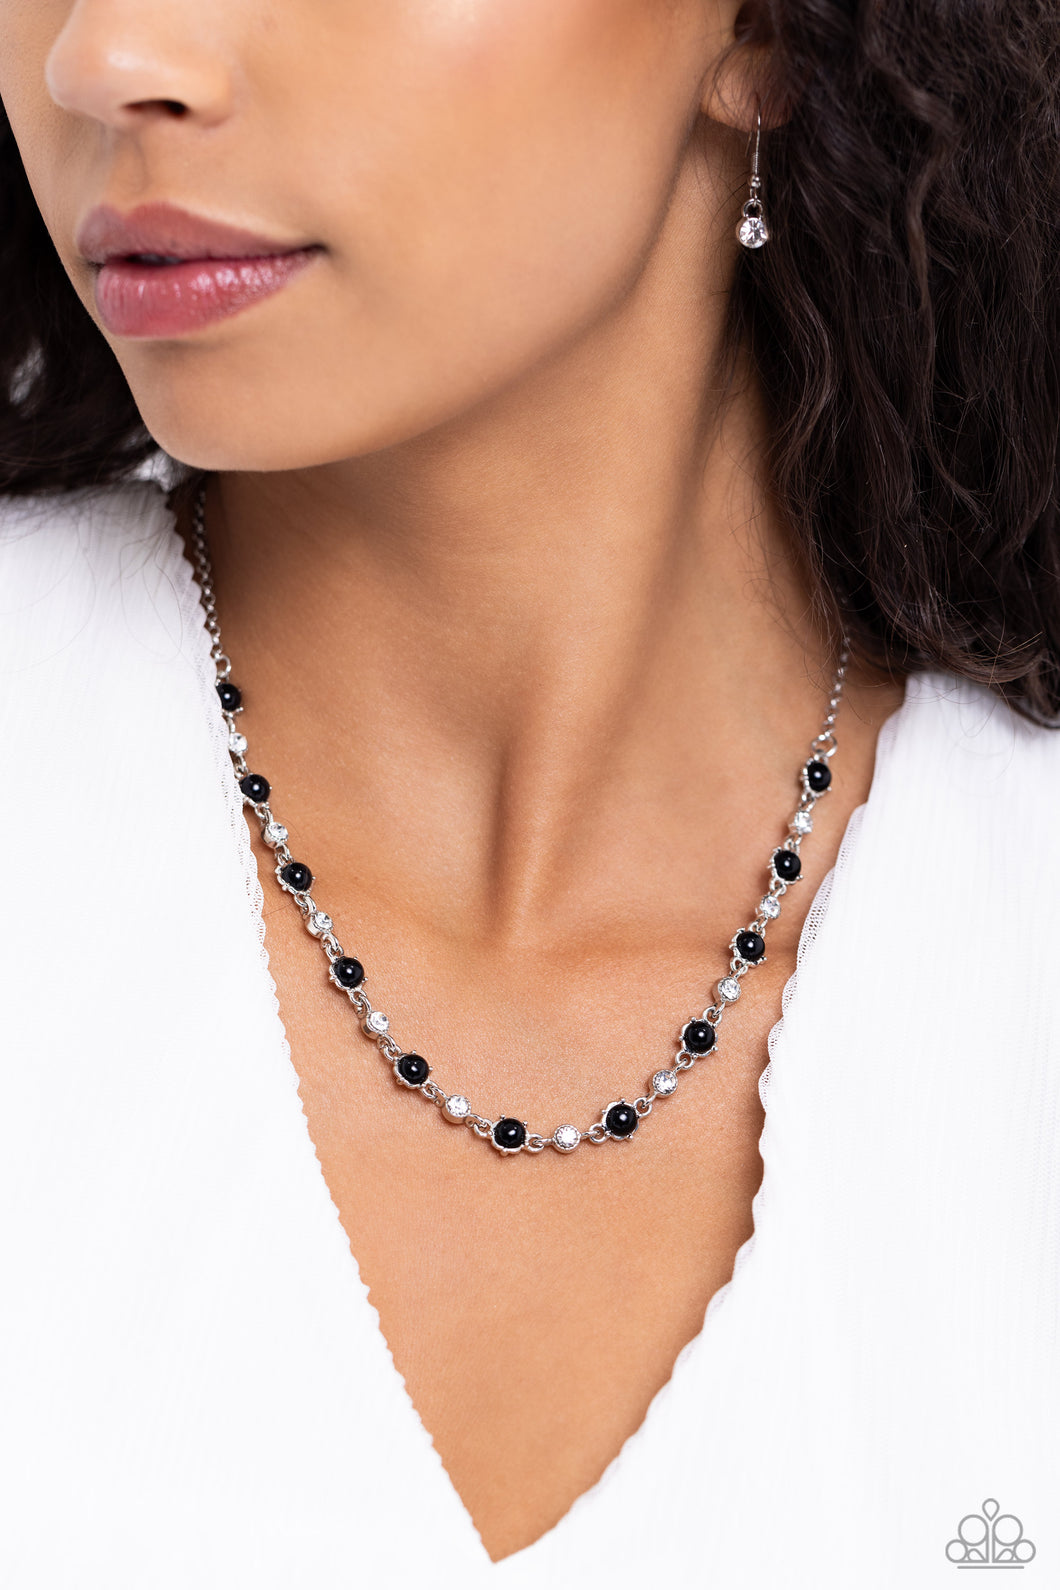 Paparazzi “Pronged Passion” Black Necklace Earring Set